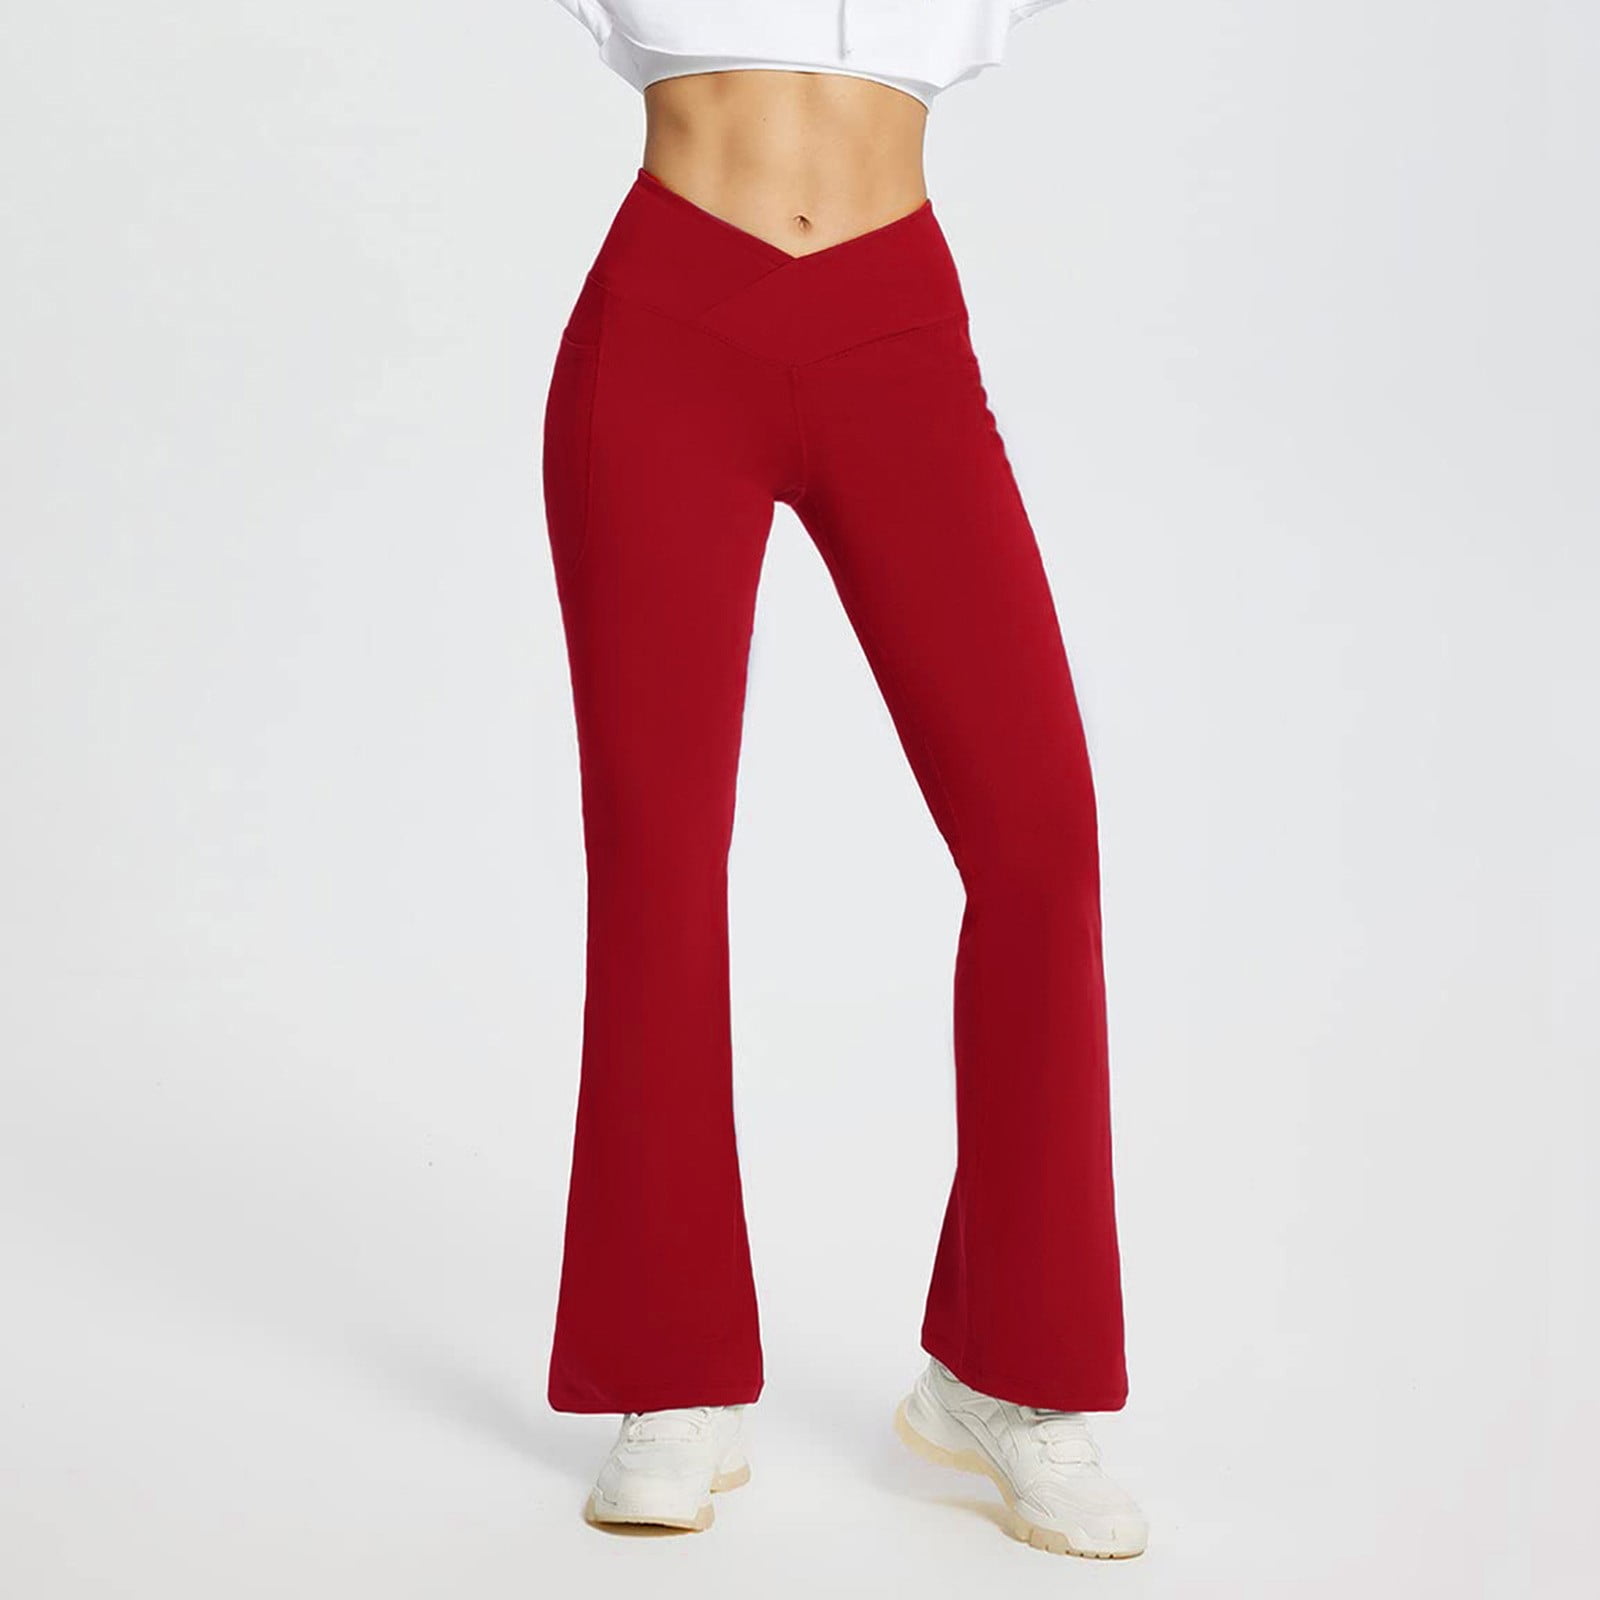 DxhmoneyHX Bootleg Yoga Capris Pants for Women Tummy Control High Waist  Workout Flare Crop Pants with Pockets 